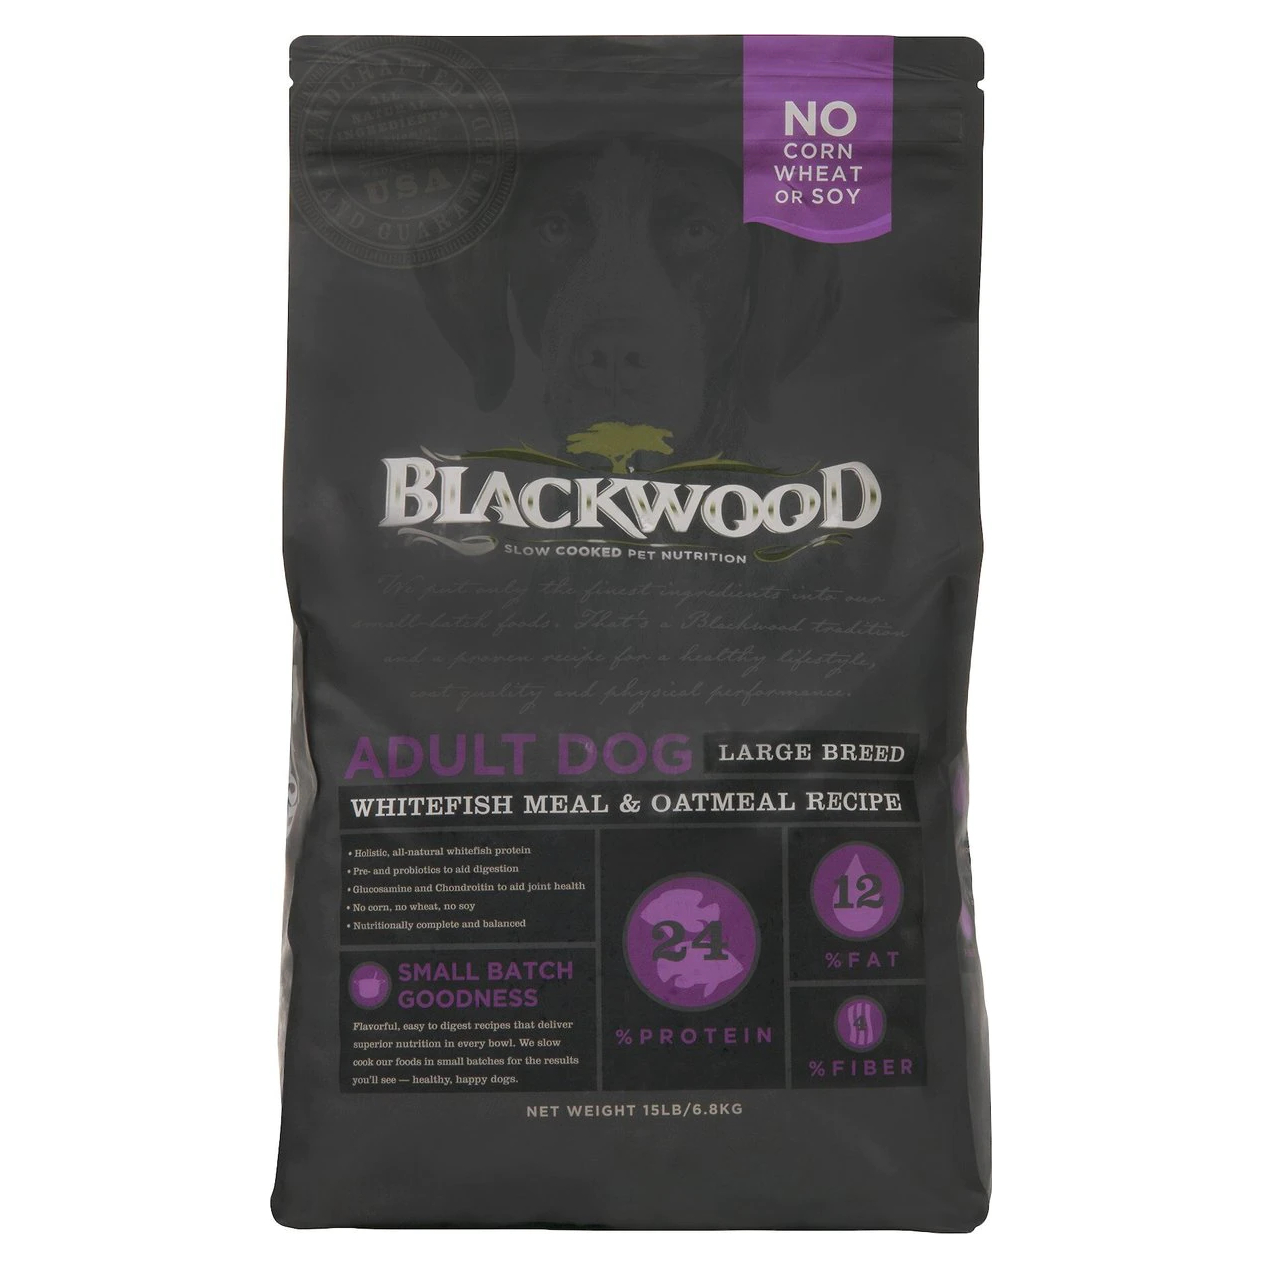 Blackwood Large Breed Dry Dog Food